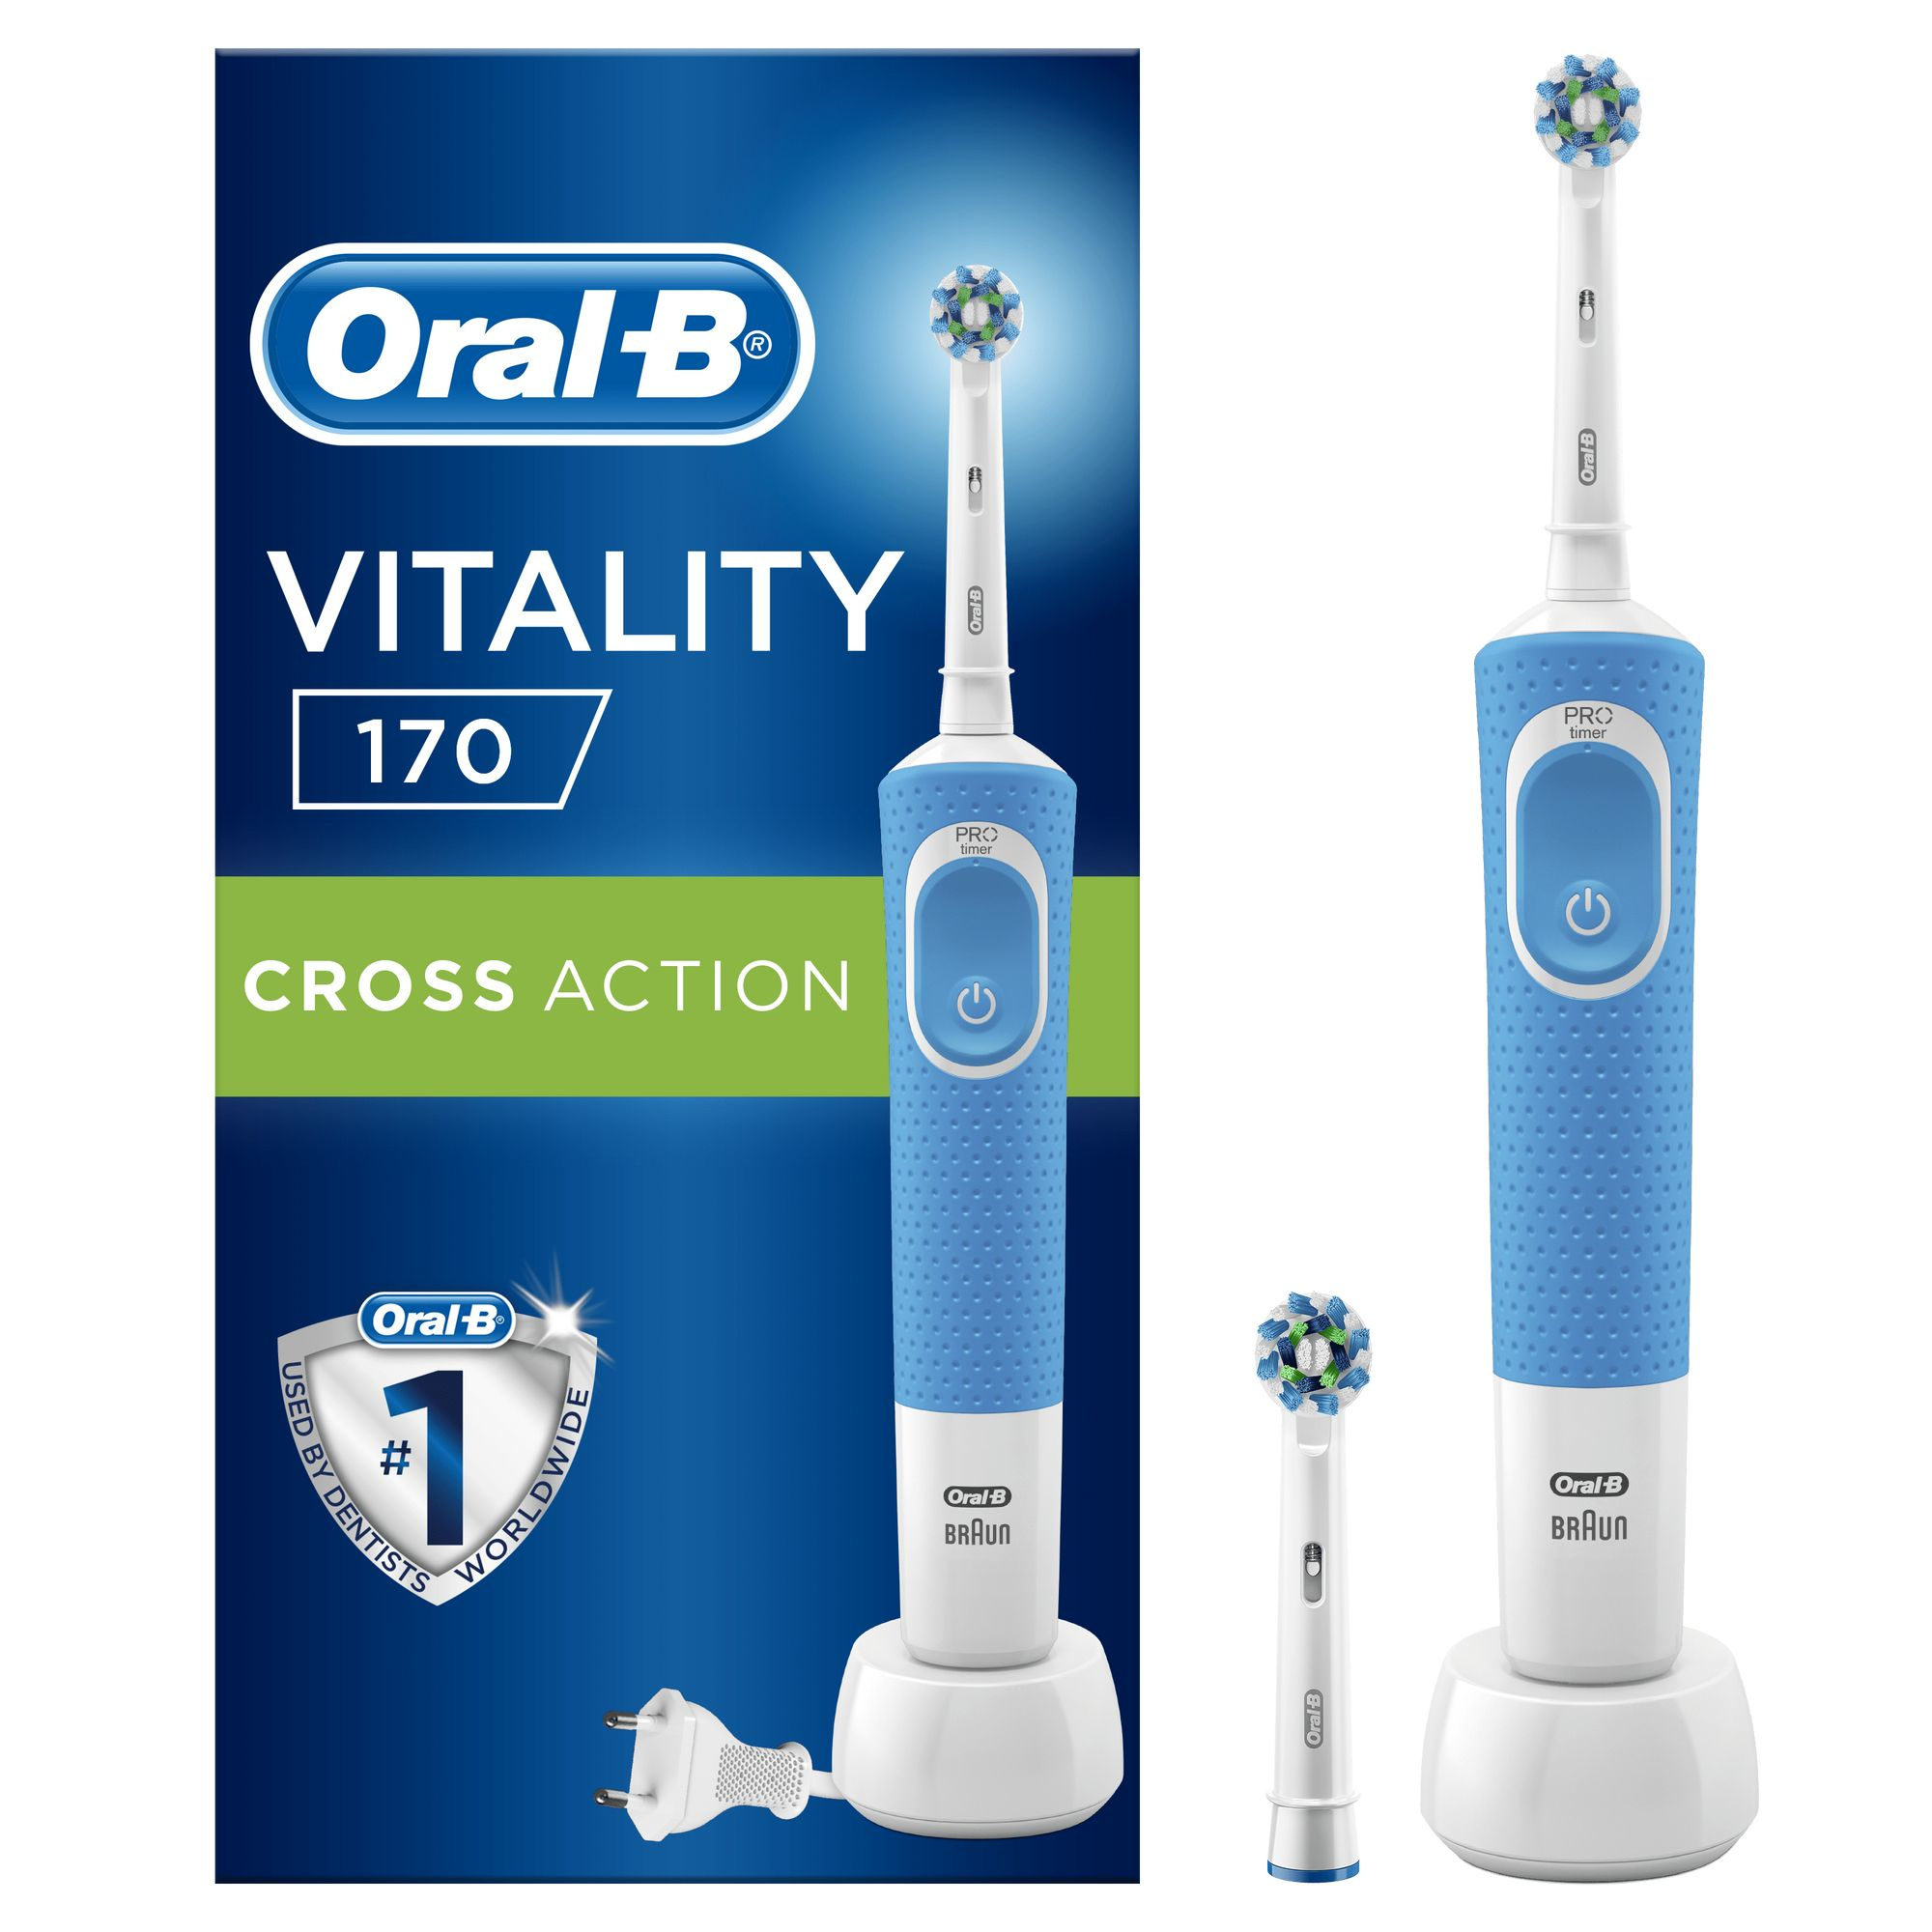 Oral-B 170 CrossAction